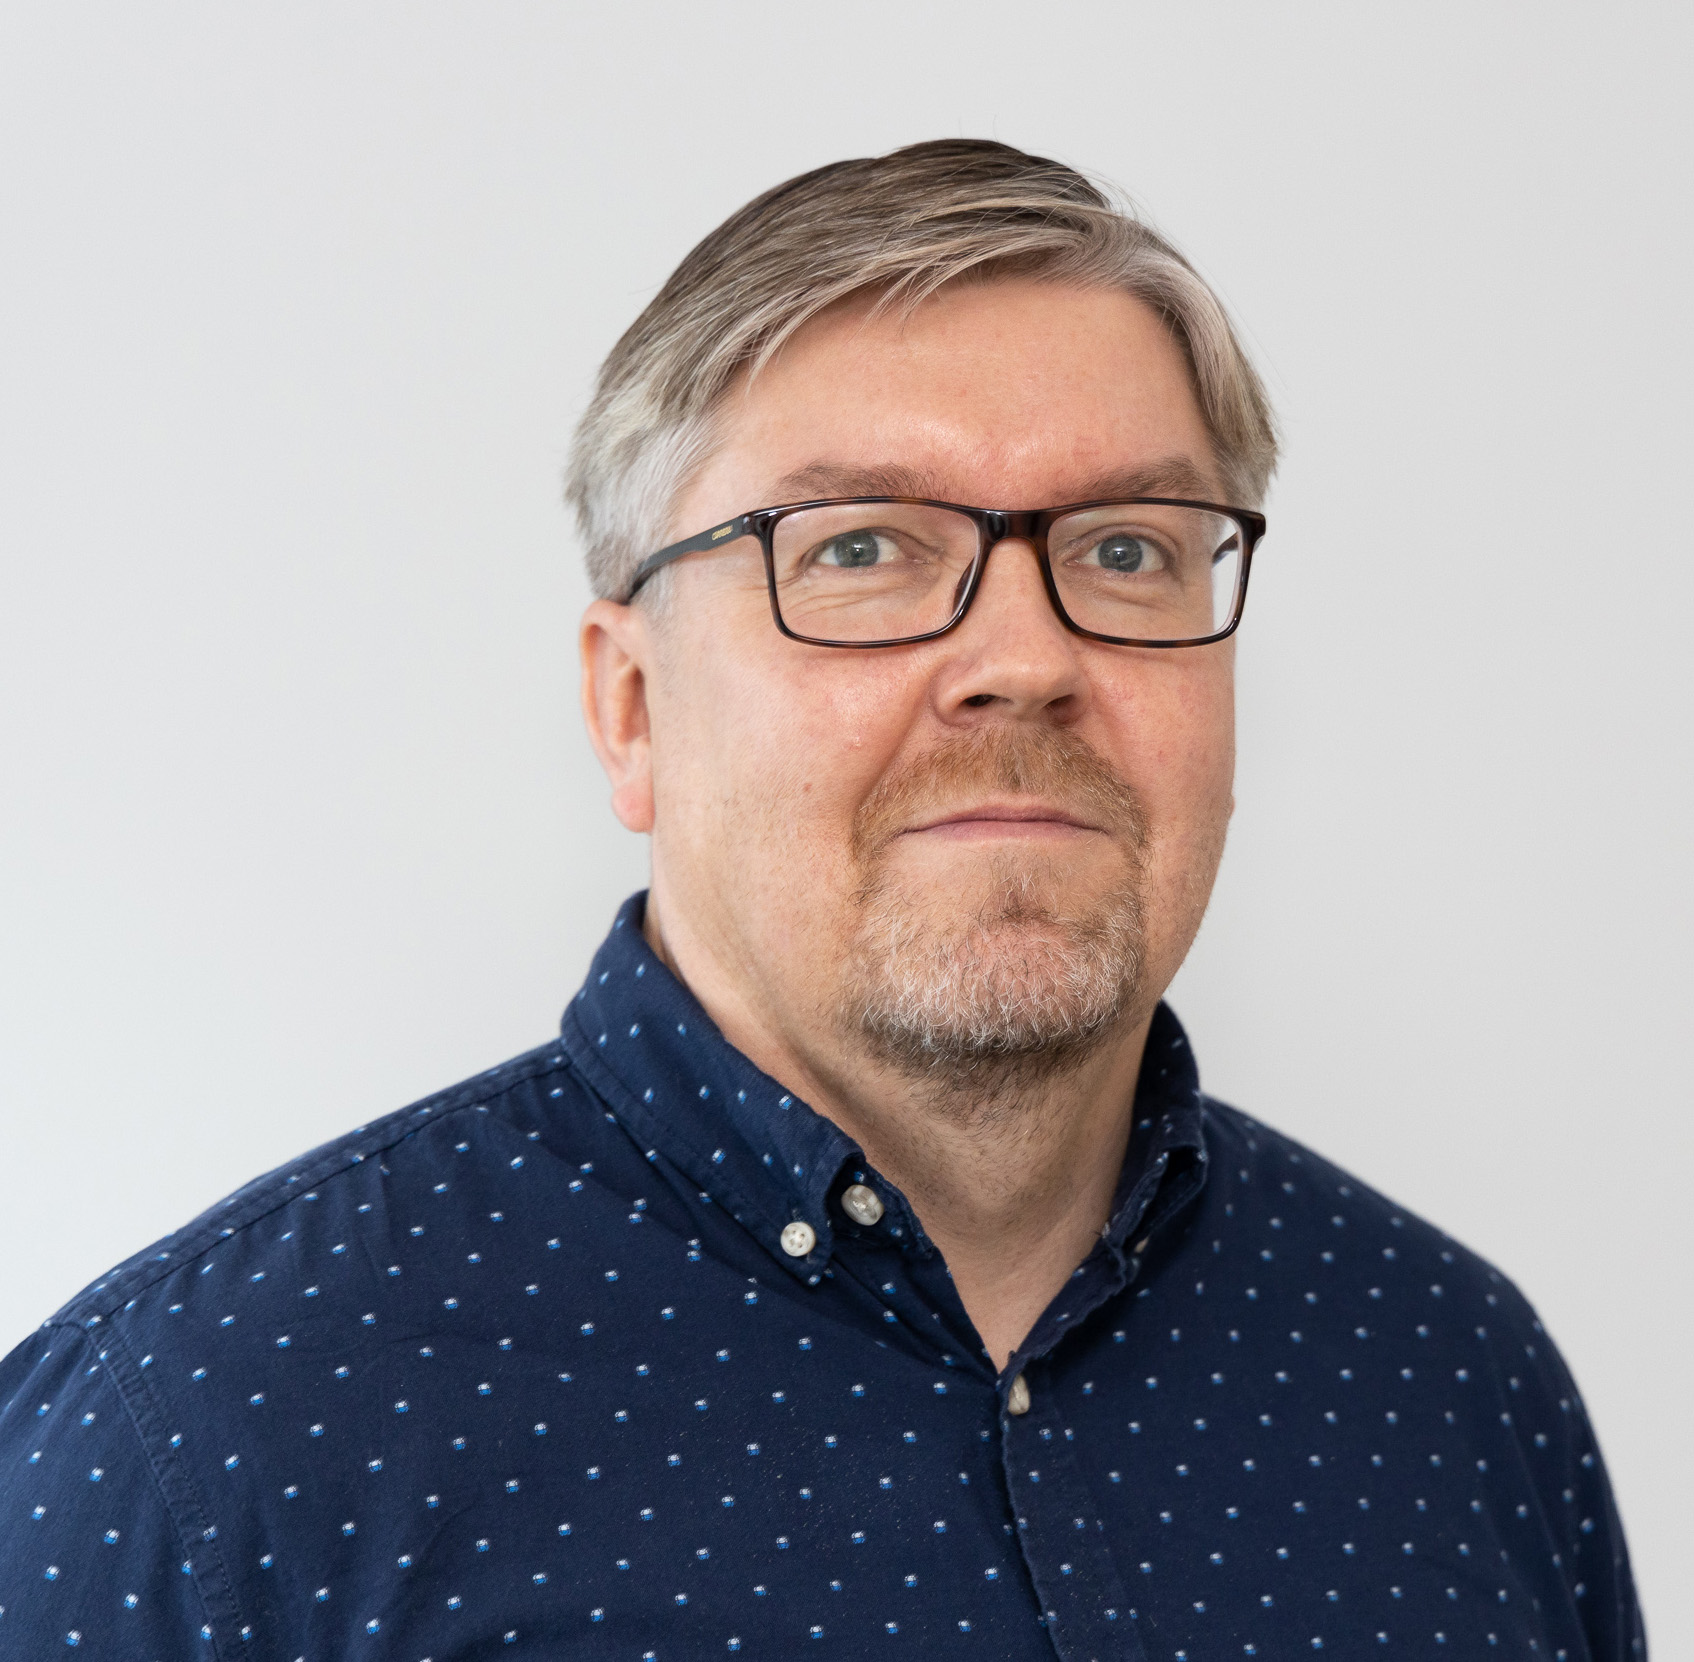 Profile picture of Sakari Saarinen, Senior Adviser at Helsinki-Uusimaa Regional Council